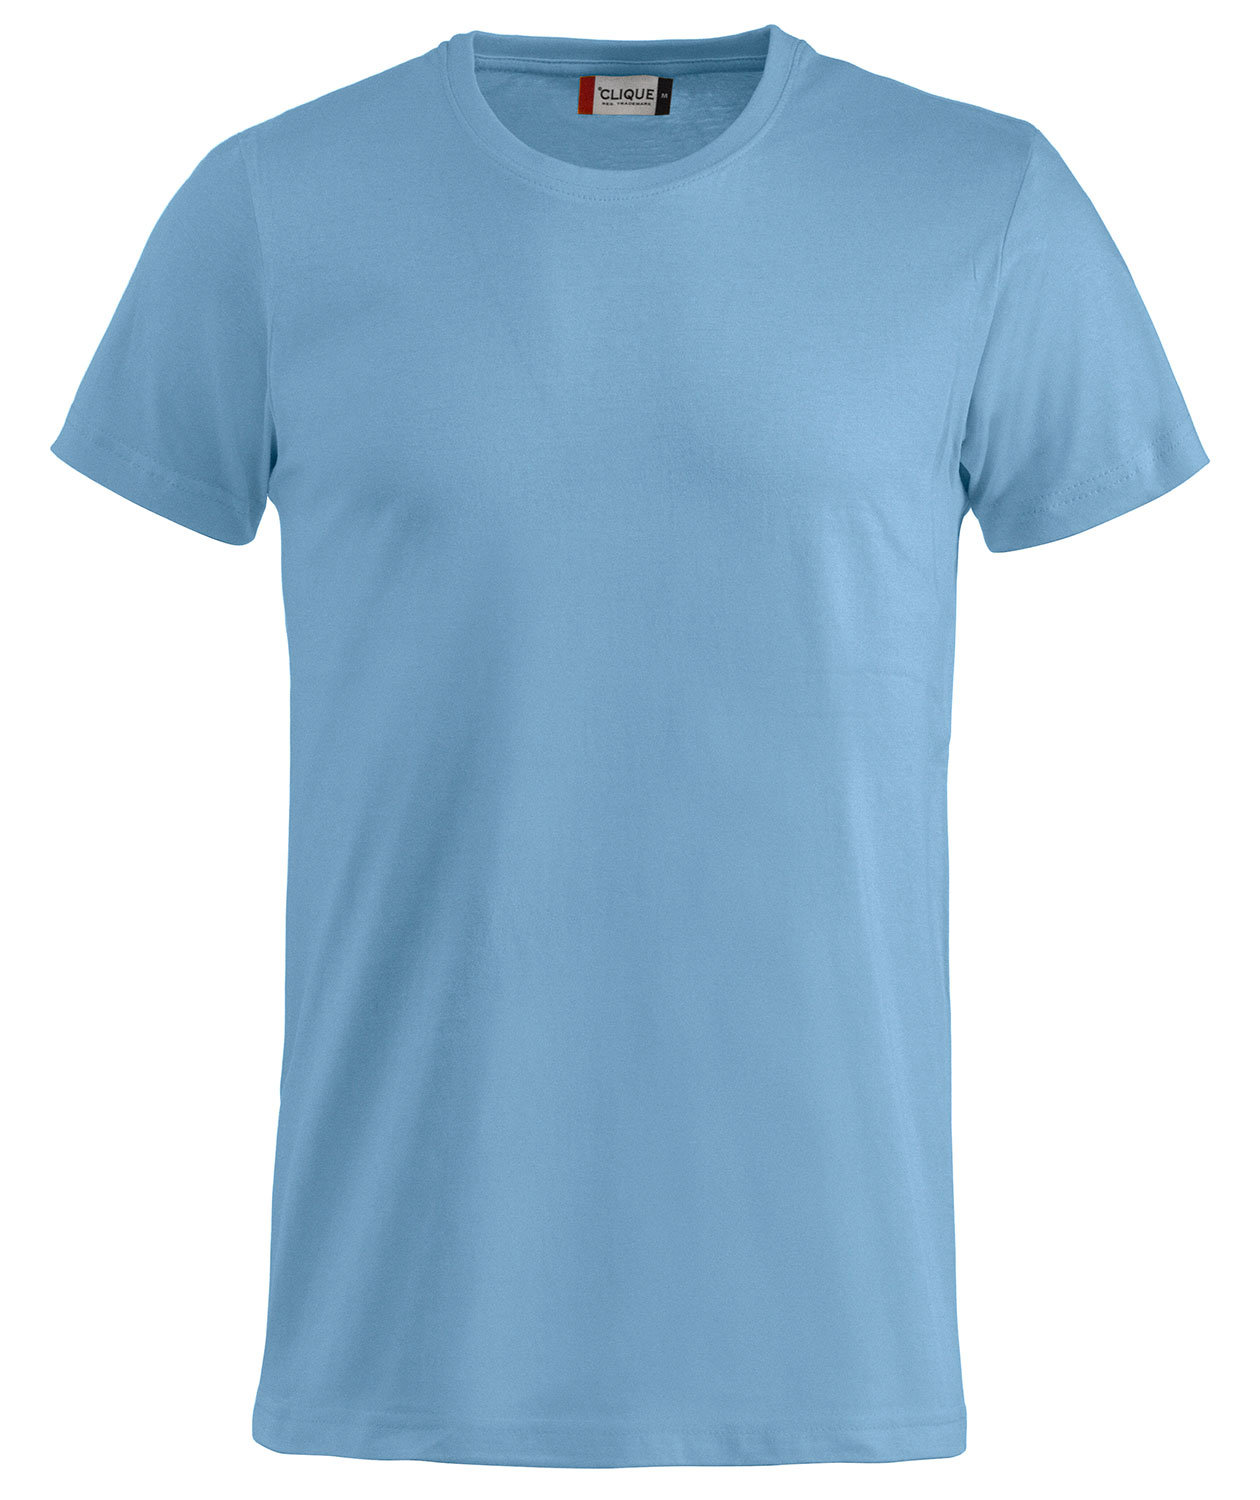 Clique camisa Basic-t L/s señores grises jaspeadas tshirt 